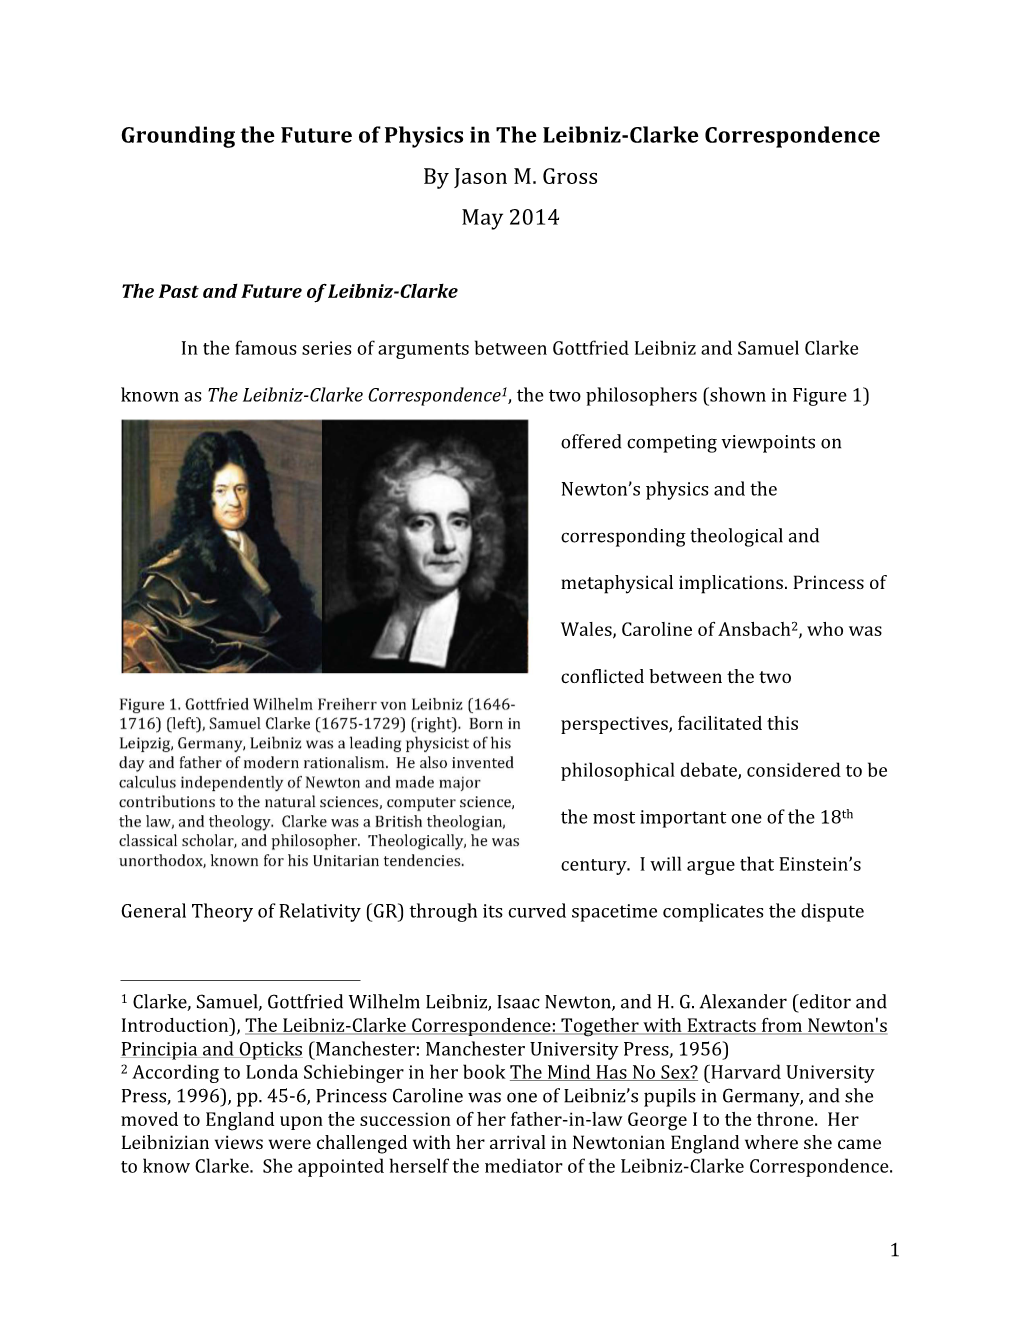 Grounding the Future of Physics in the Leibniz-Clarke Correspondence by Jason M